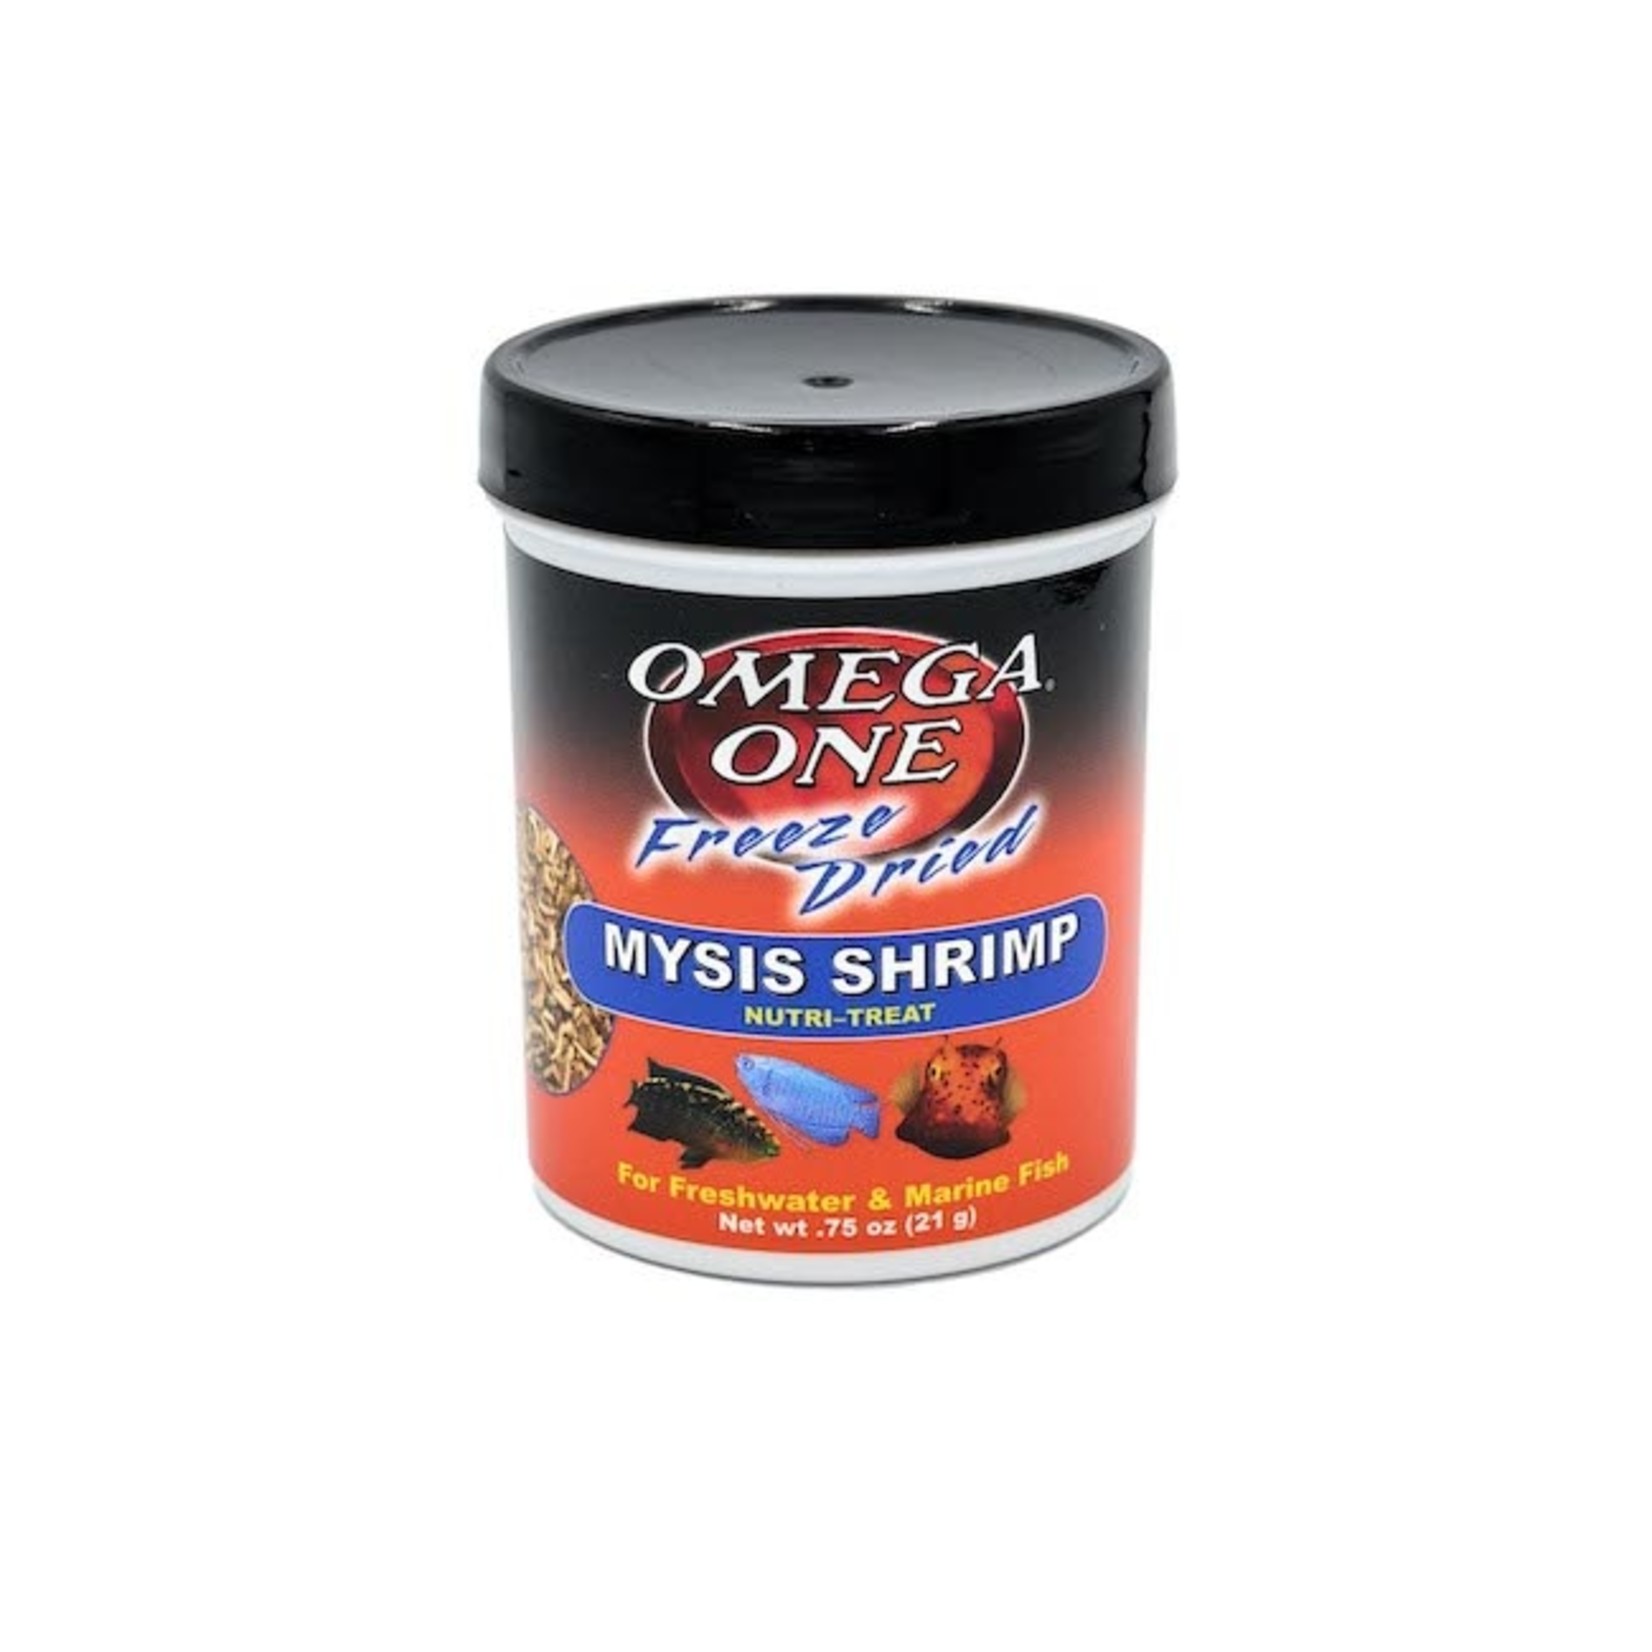 Omega One Freeze-Dried Mysis Shrimp